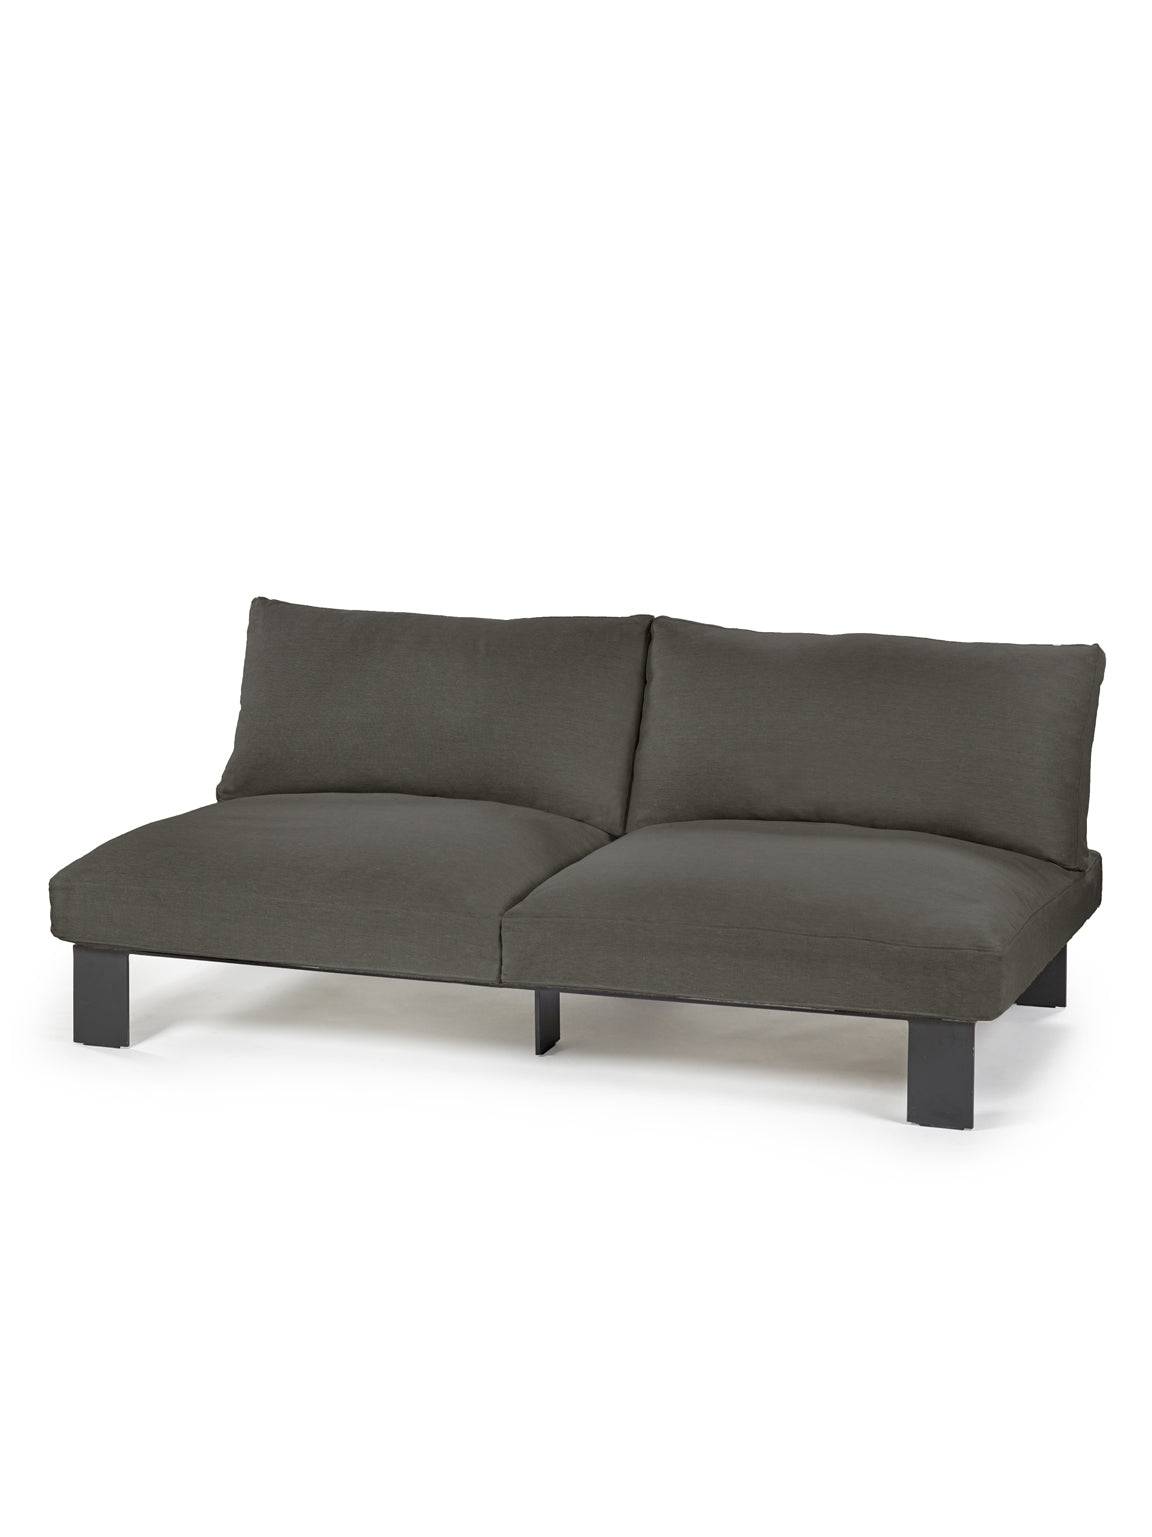 Mombaers Sofa - Charcoal - THAT COOL LIVING